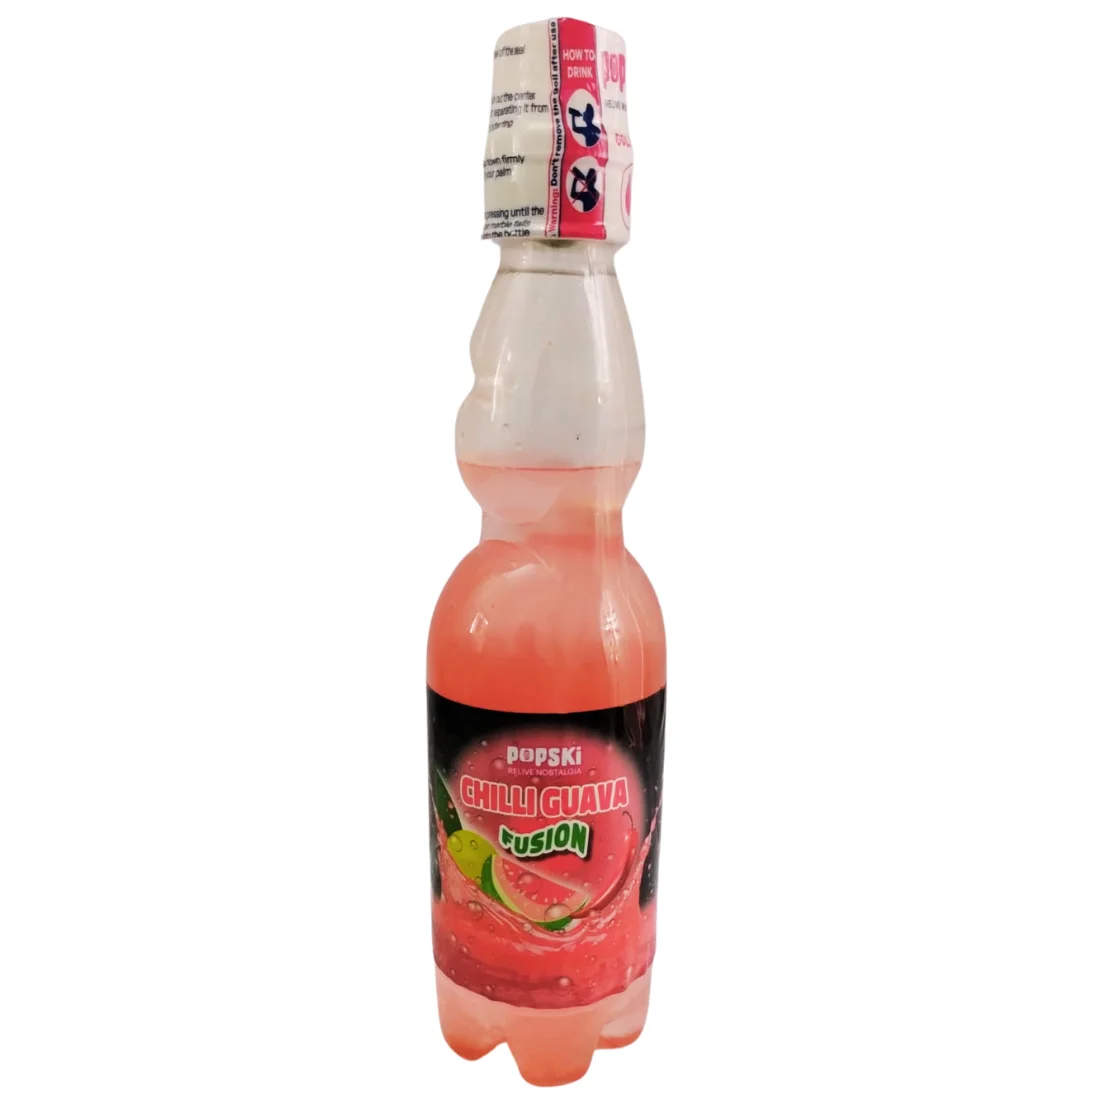 Popski Goli Soda Chilli Guava Fusion